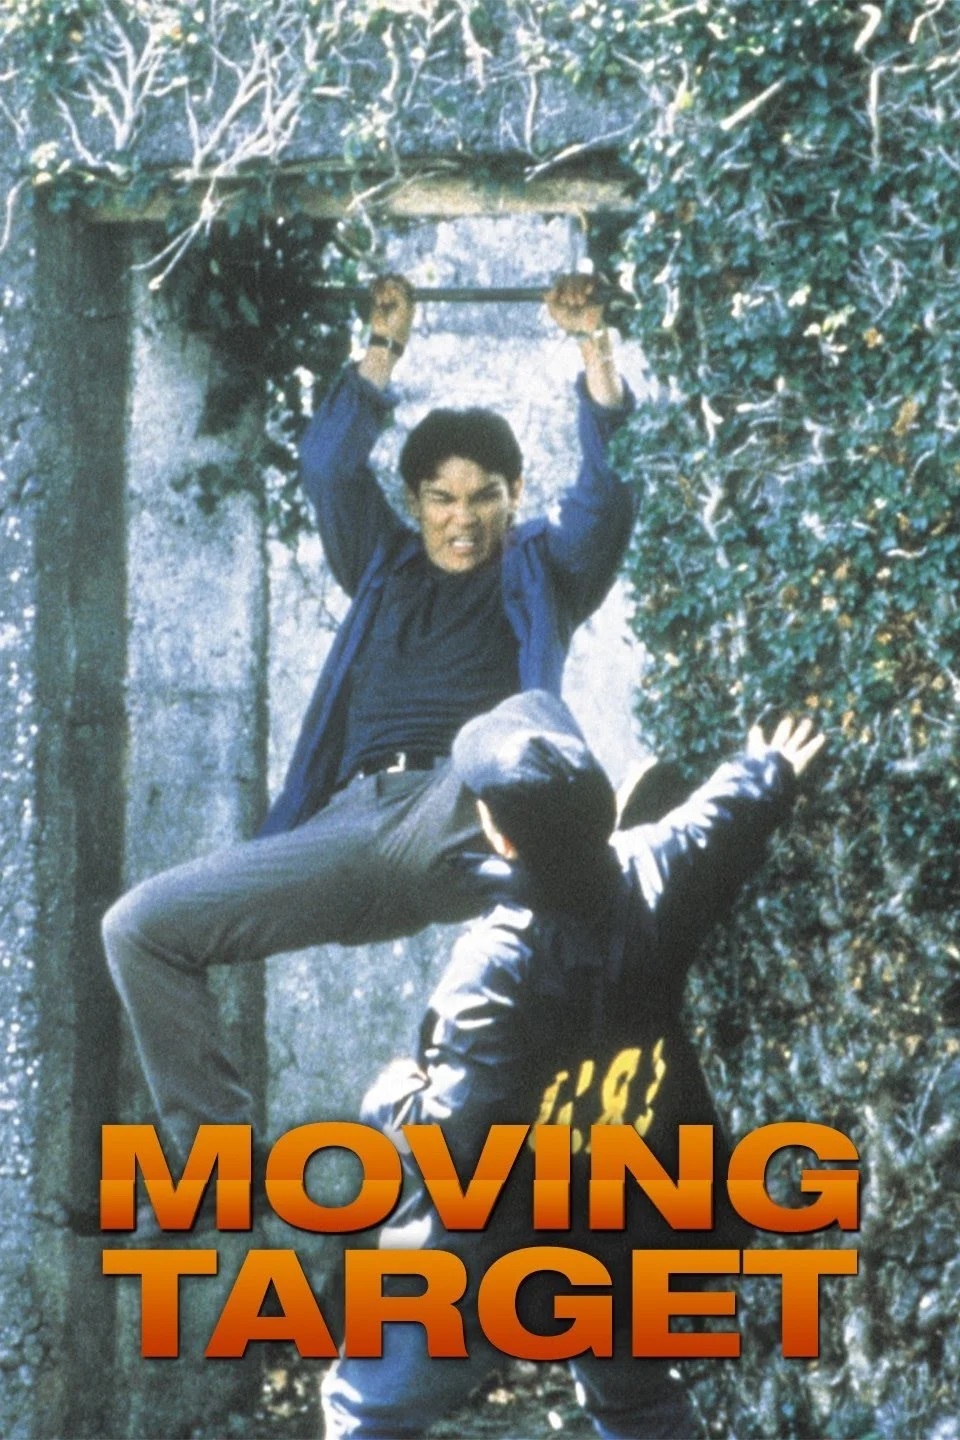 Moving Target (2000) starring Don Wilson on DVD on DVD